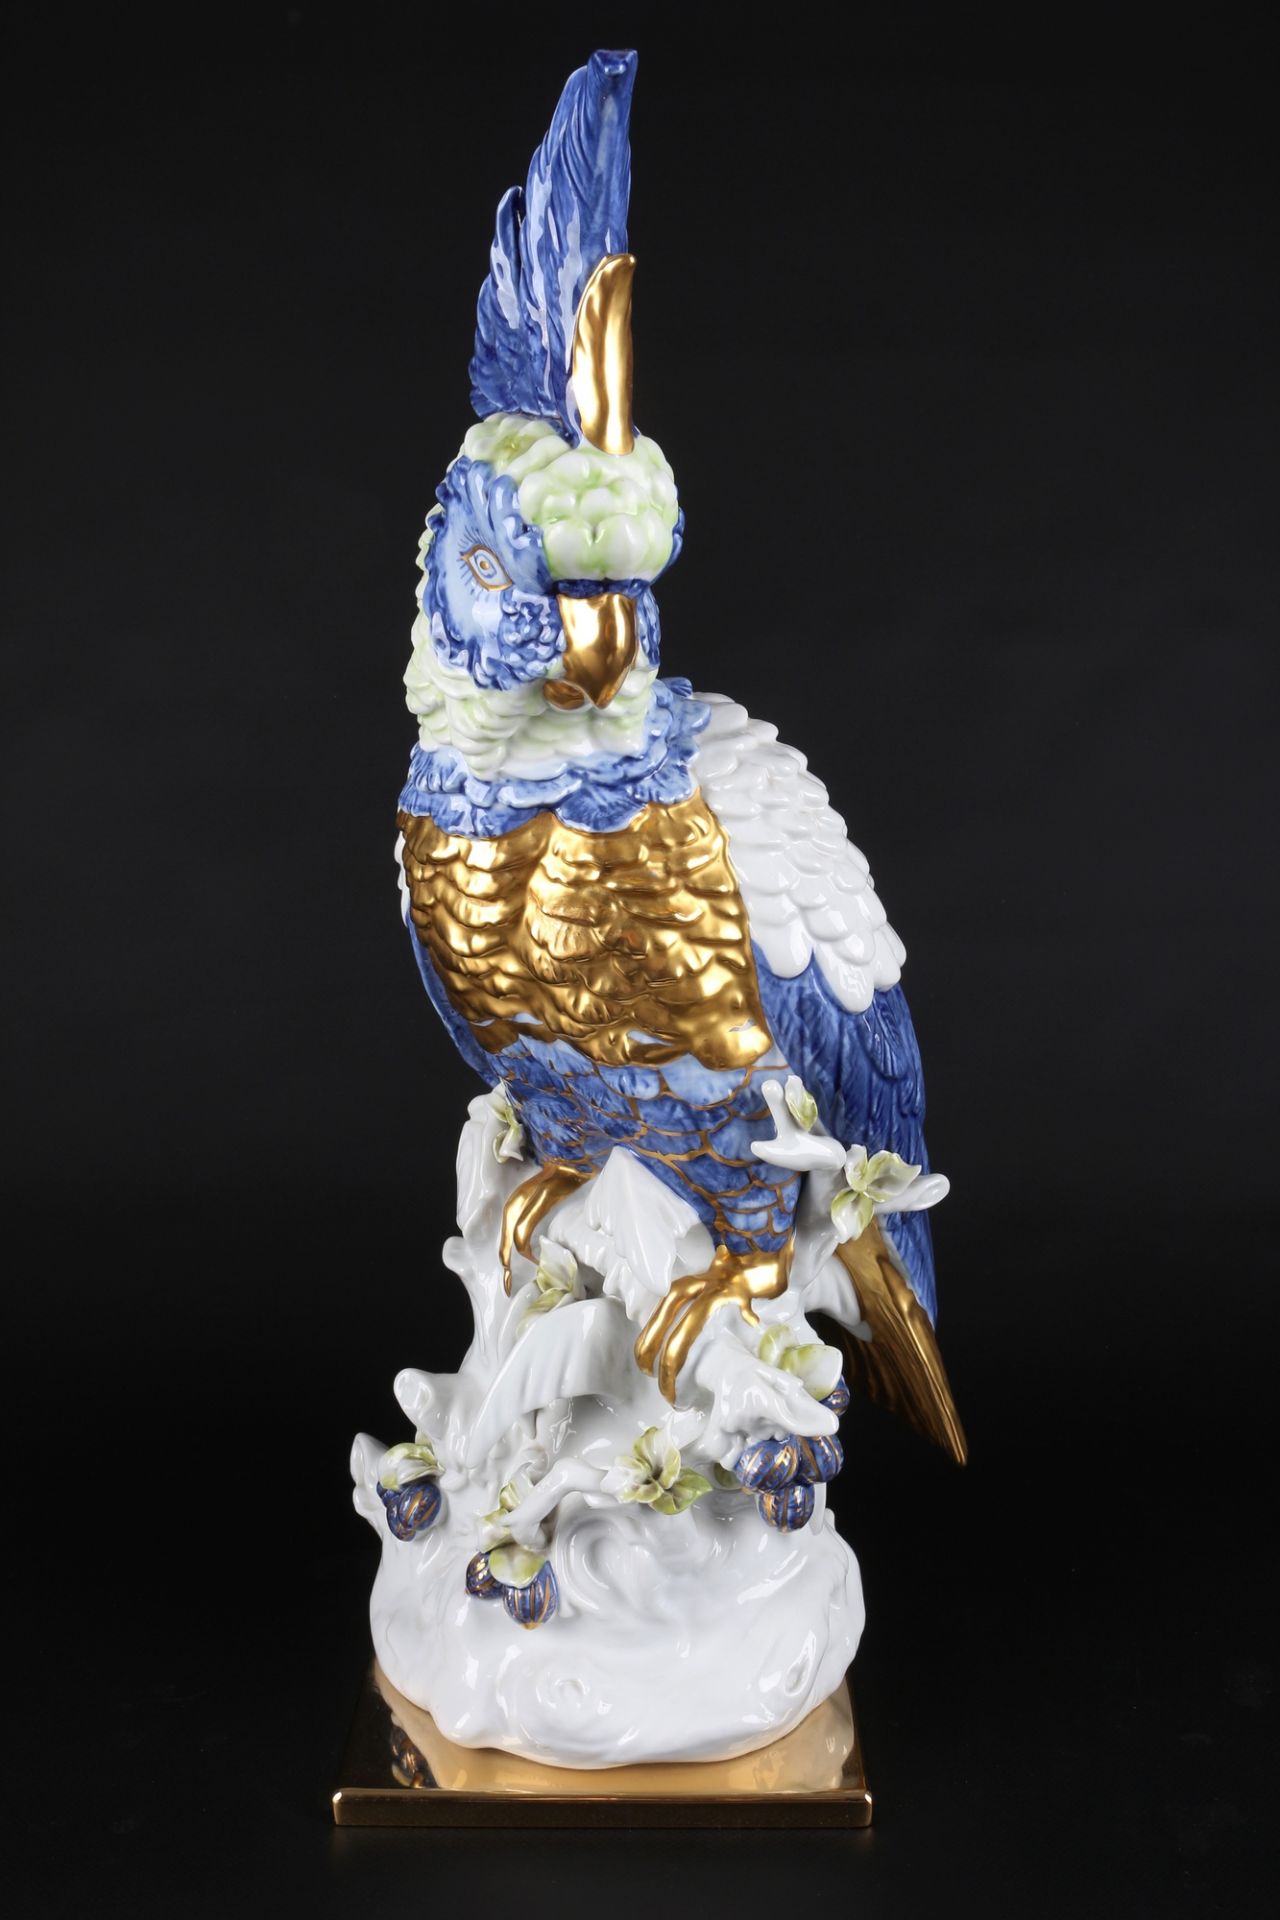 Manifattura Artistica le Porcellane großer Kakadu mit 2 Wiedehopfe, porcelain parrot / hoopoo, - Bild 2 aus 6